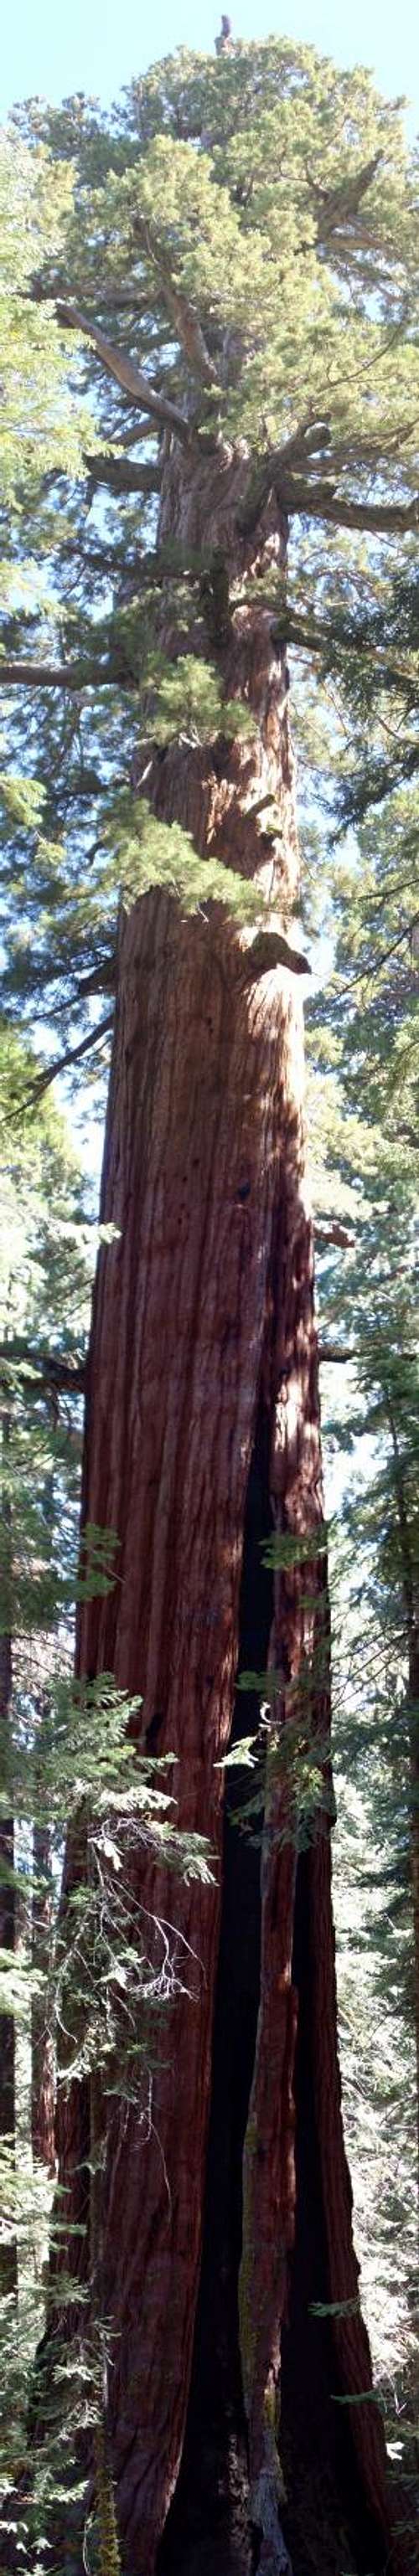 Ishi Giant Tree, Giant Sequoia Panorama